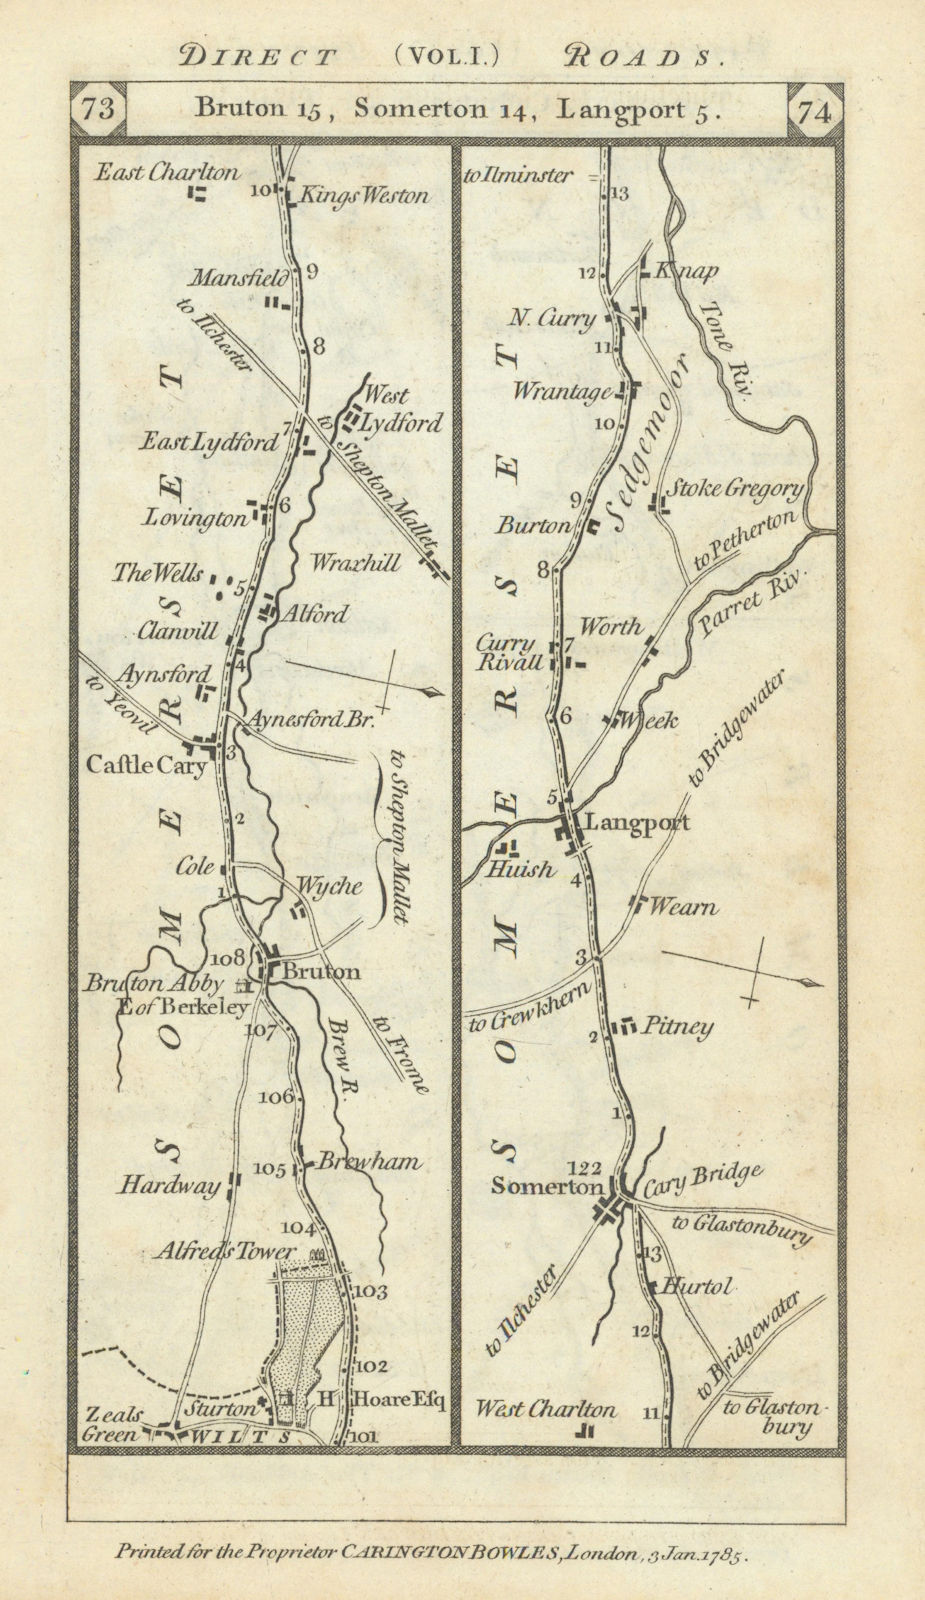 Associate Product Stourton-Bourton-Castle Cary-Langport-Wrantage road strip map PATERSON 1785